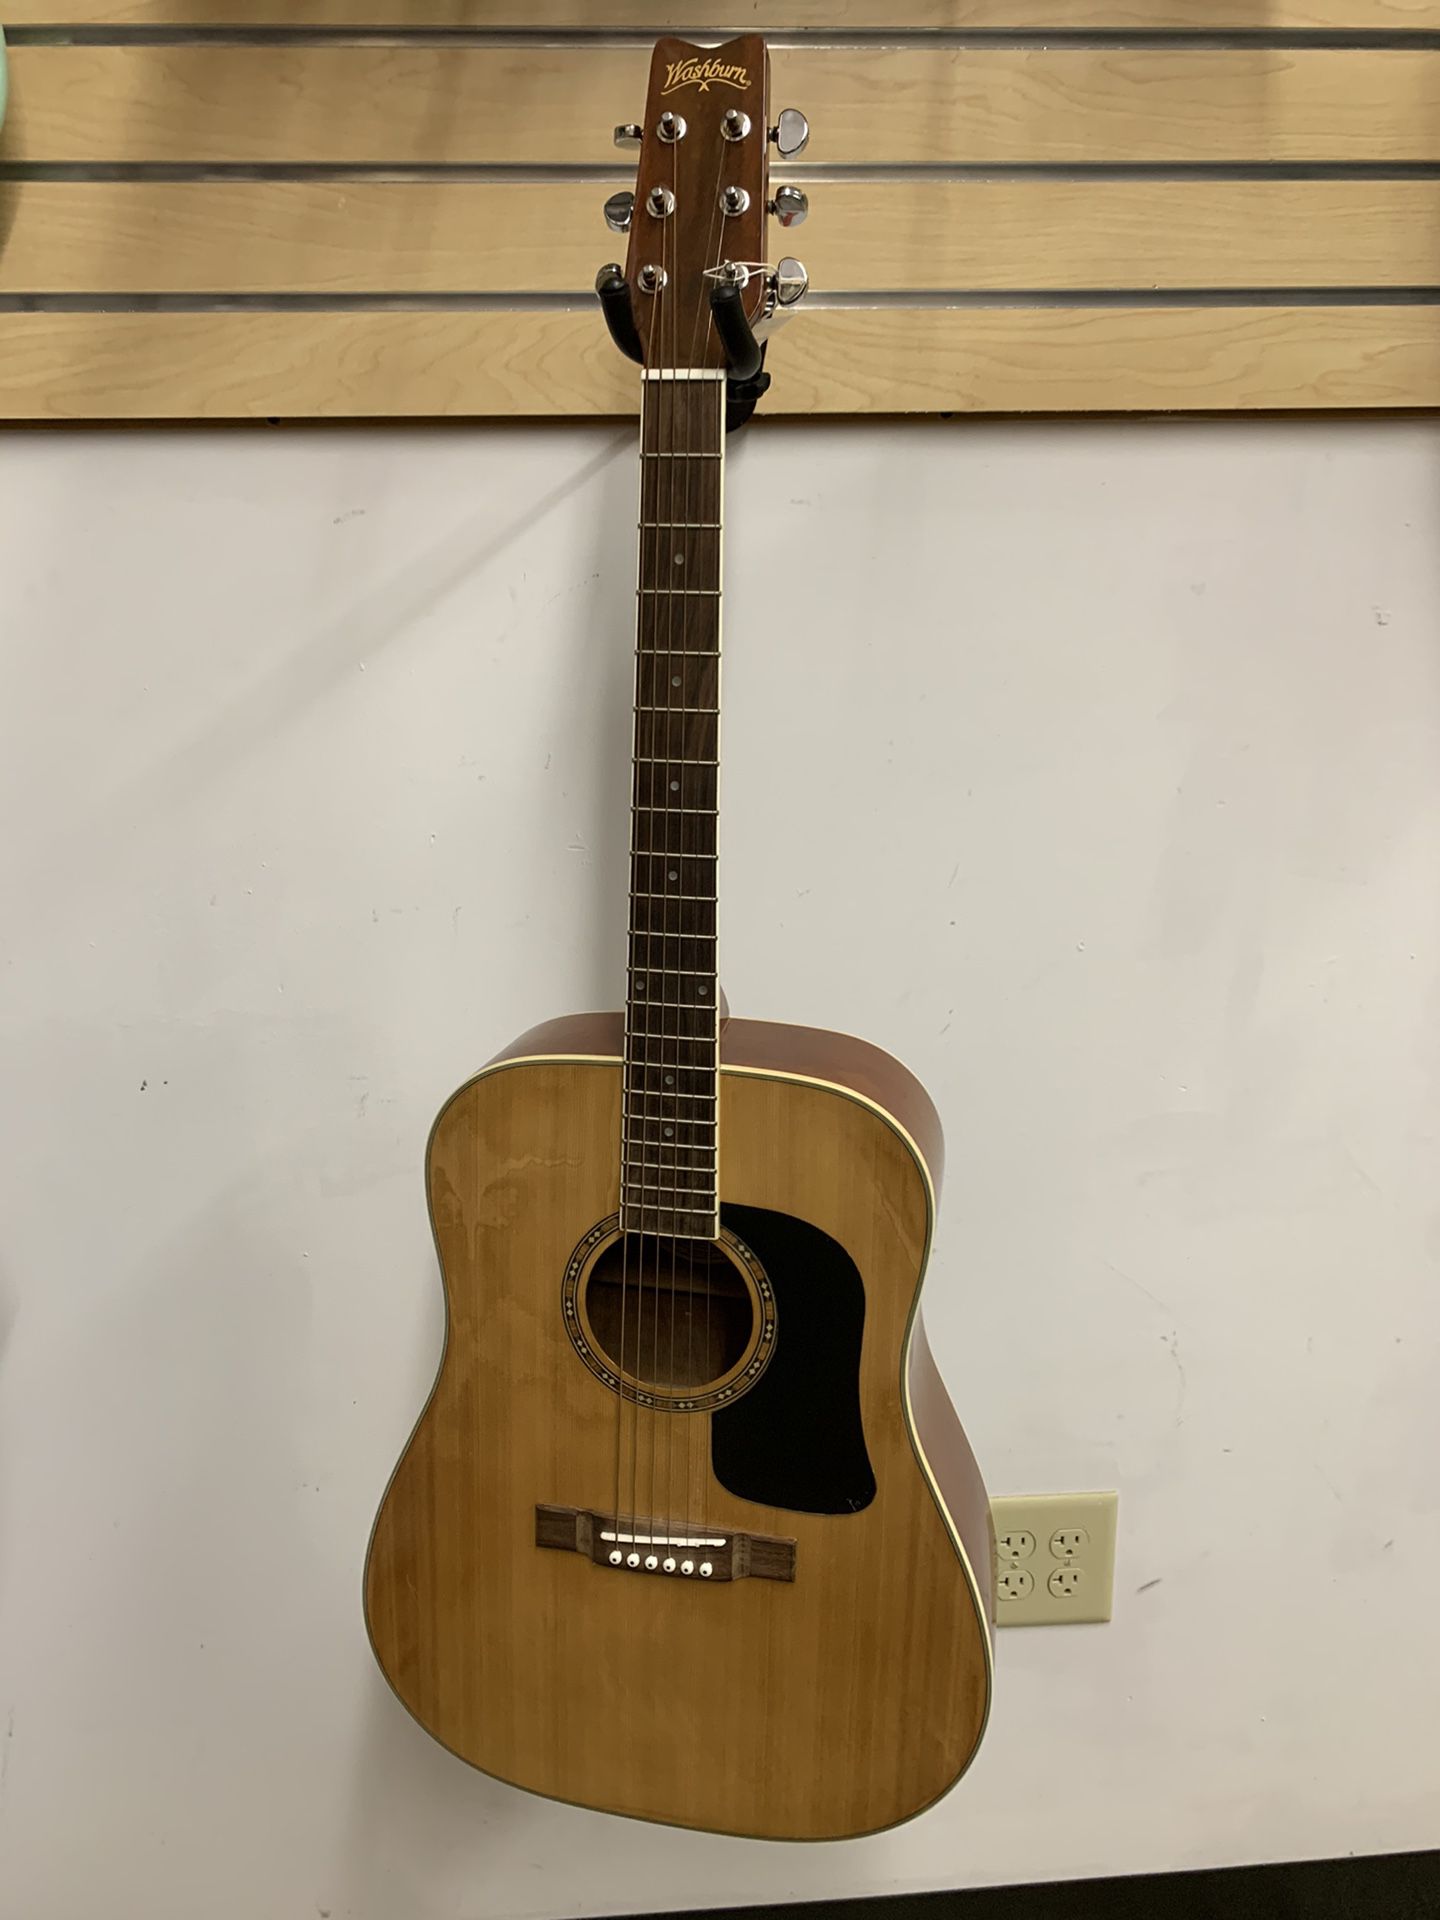 Washburn model D9C acoustic guitar